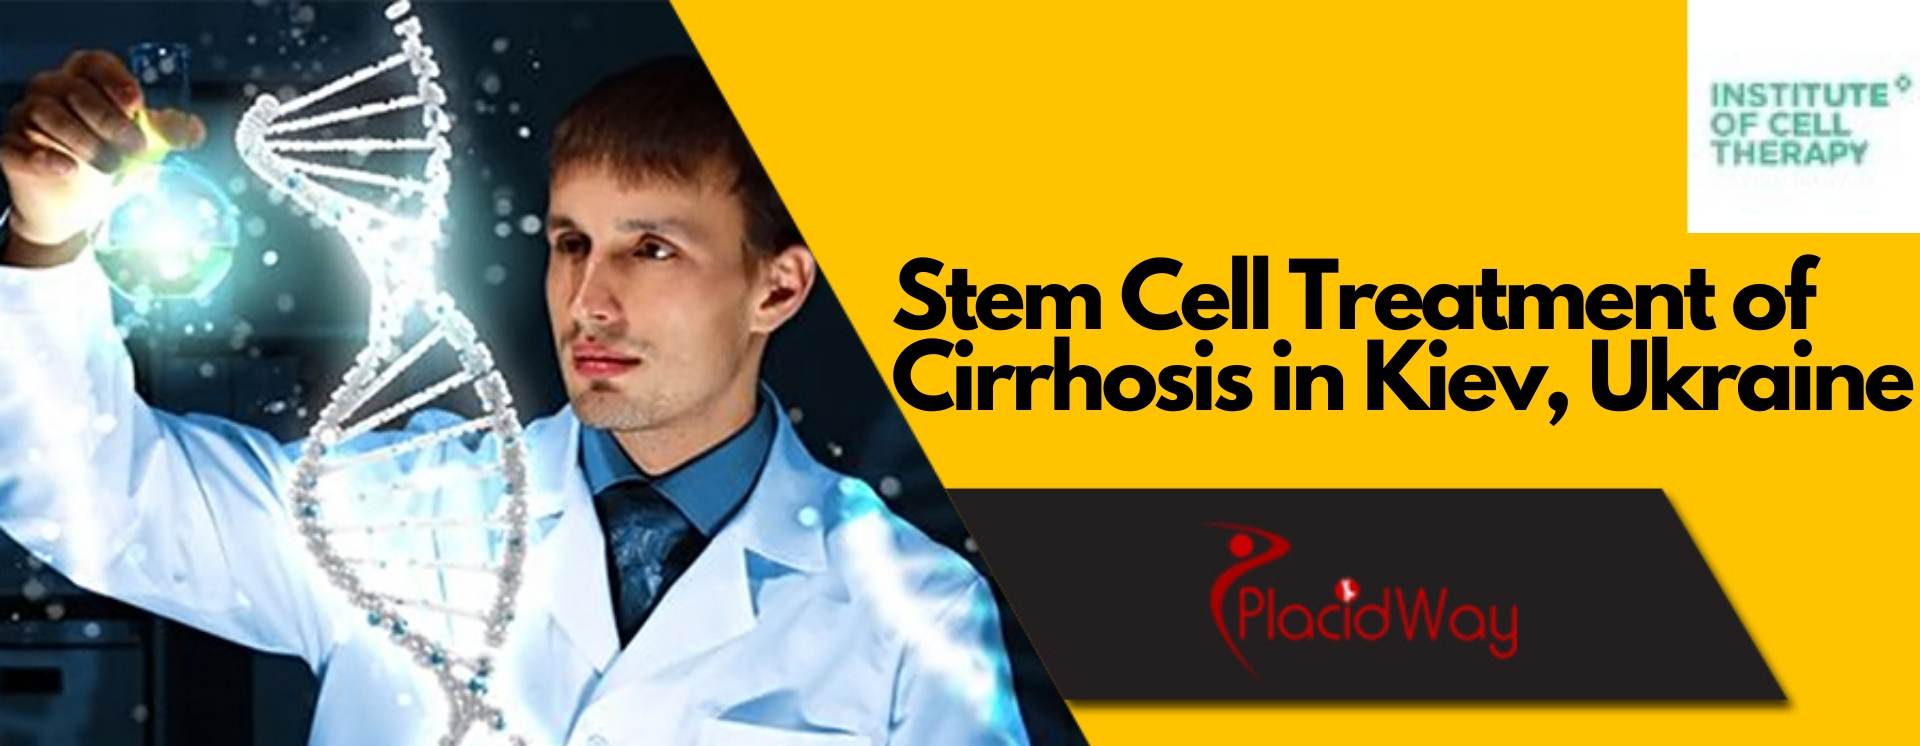 Stem Cell Treatment of Cirrhosis in Kiev, Ukraine